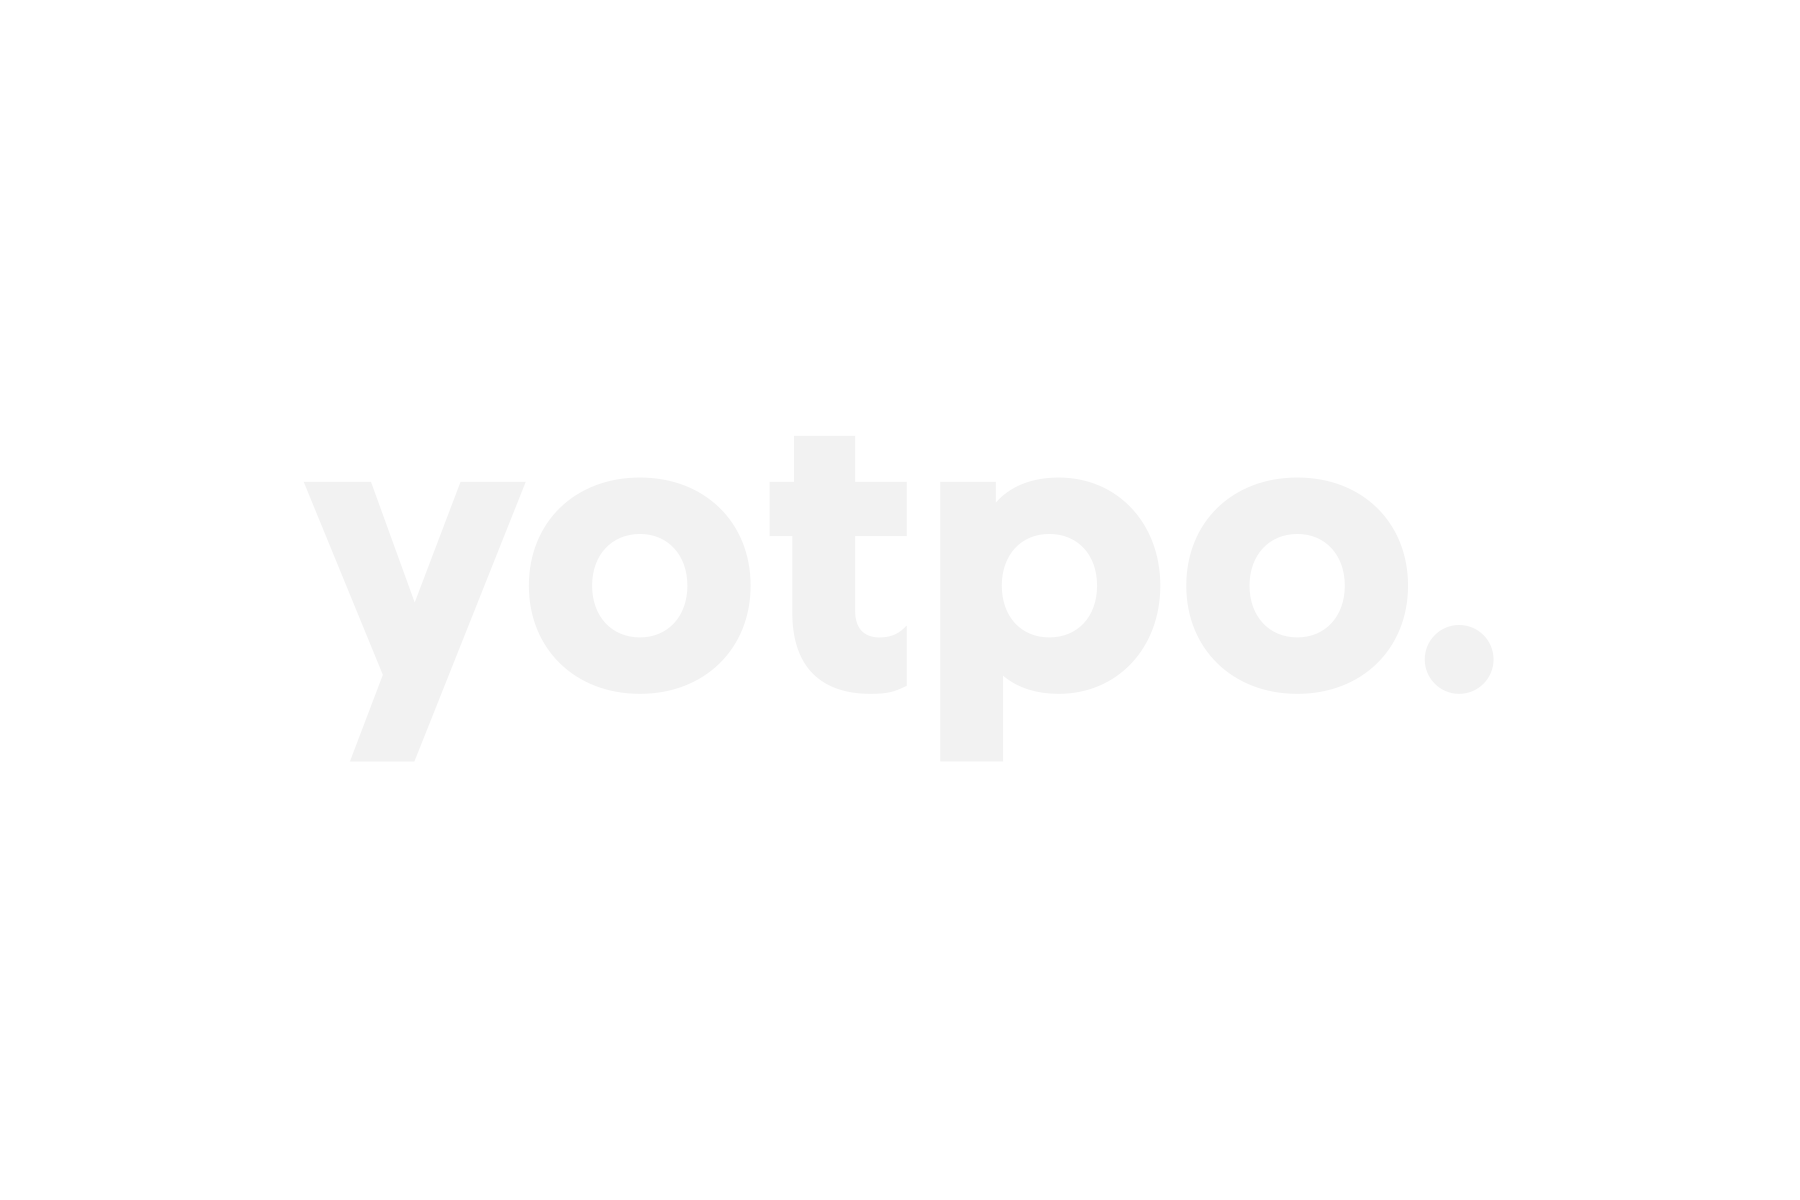 yotpo.png